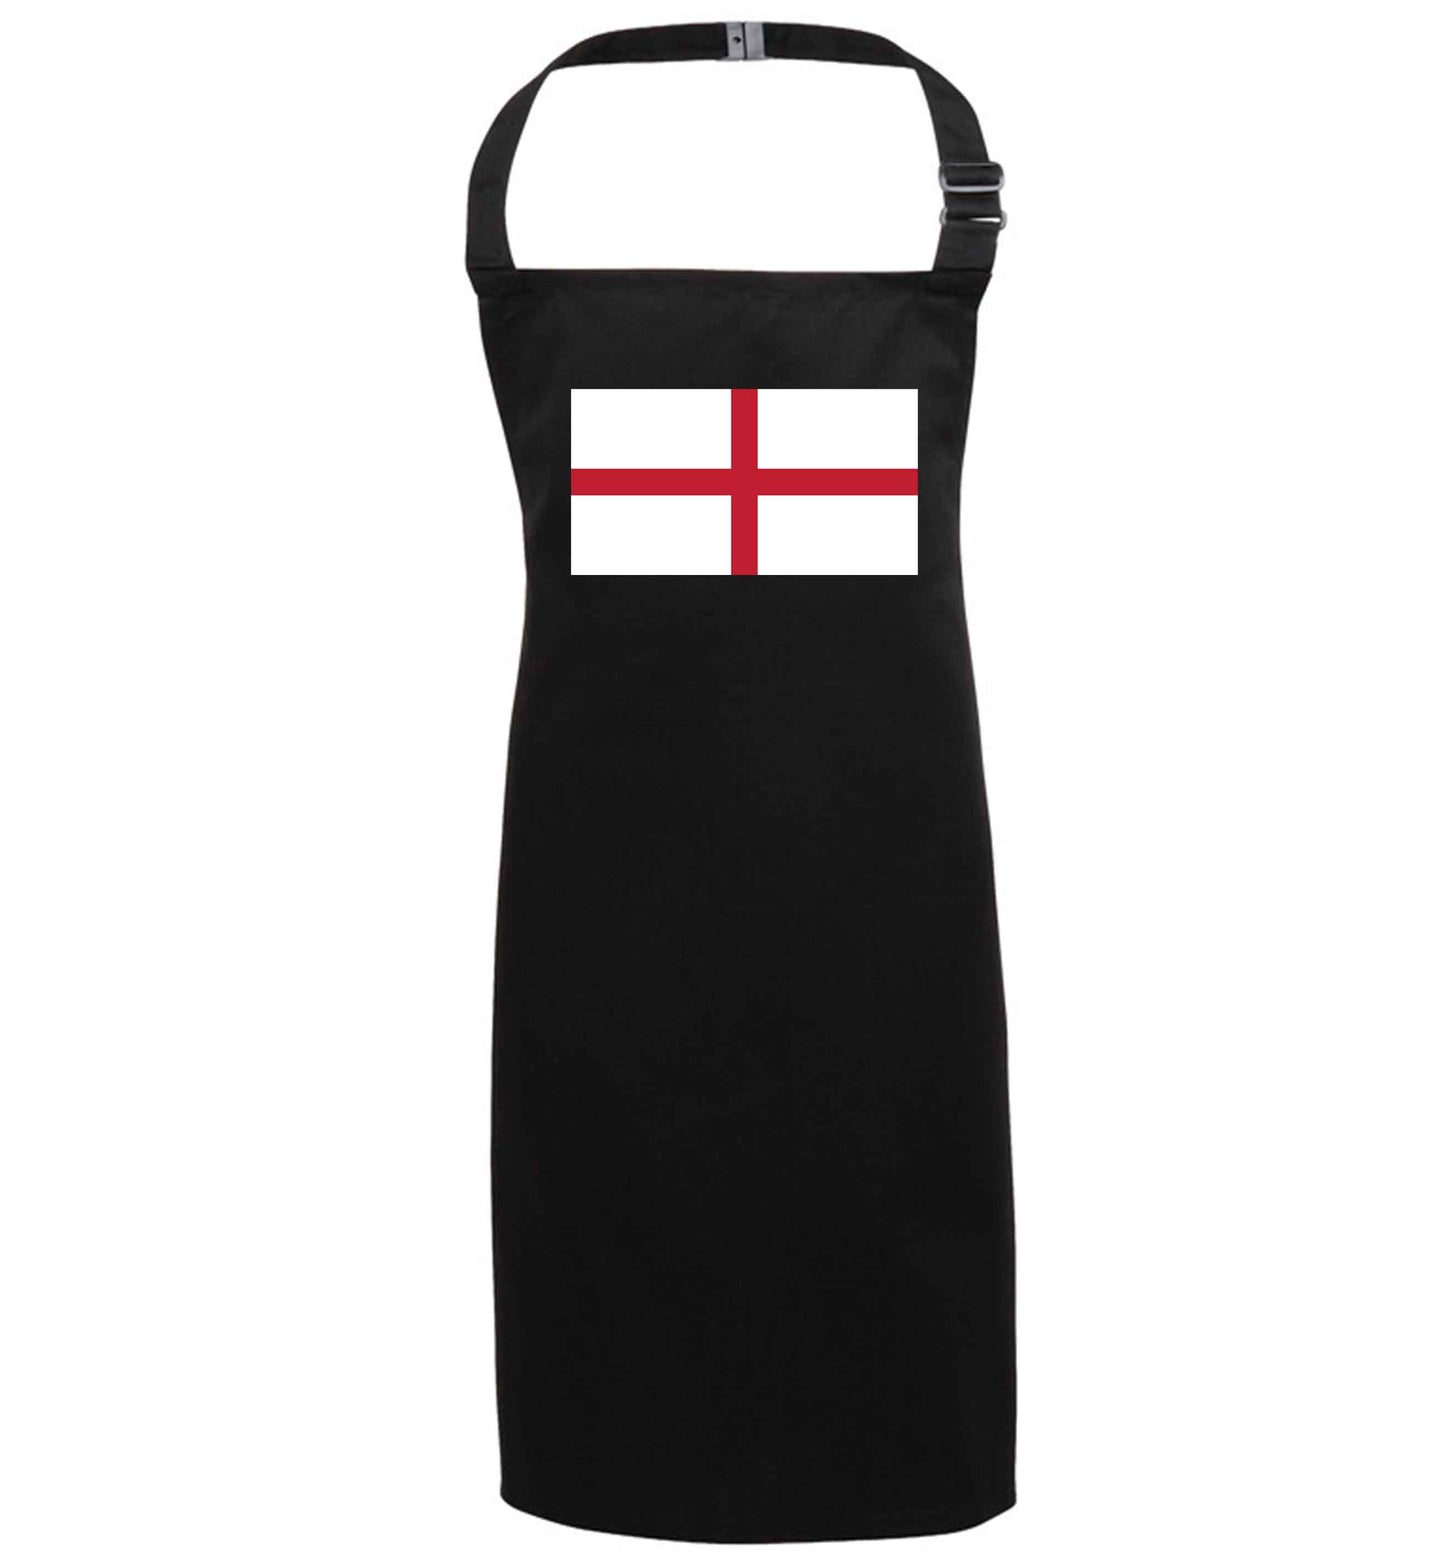 England Flag black apron 7-10 years